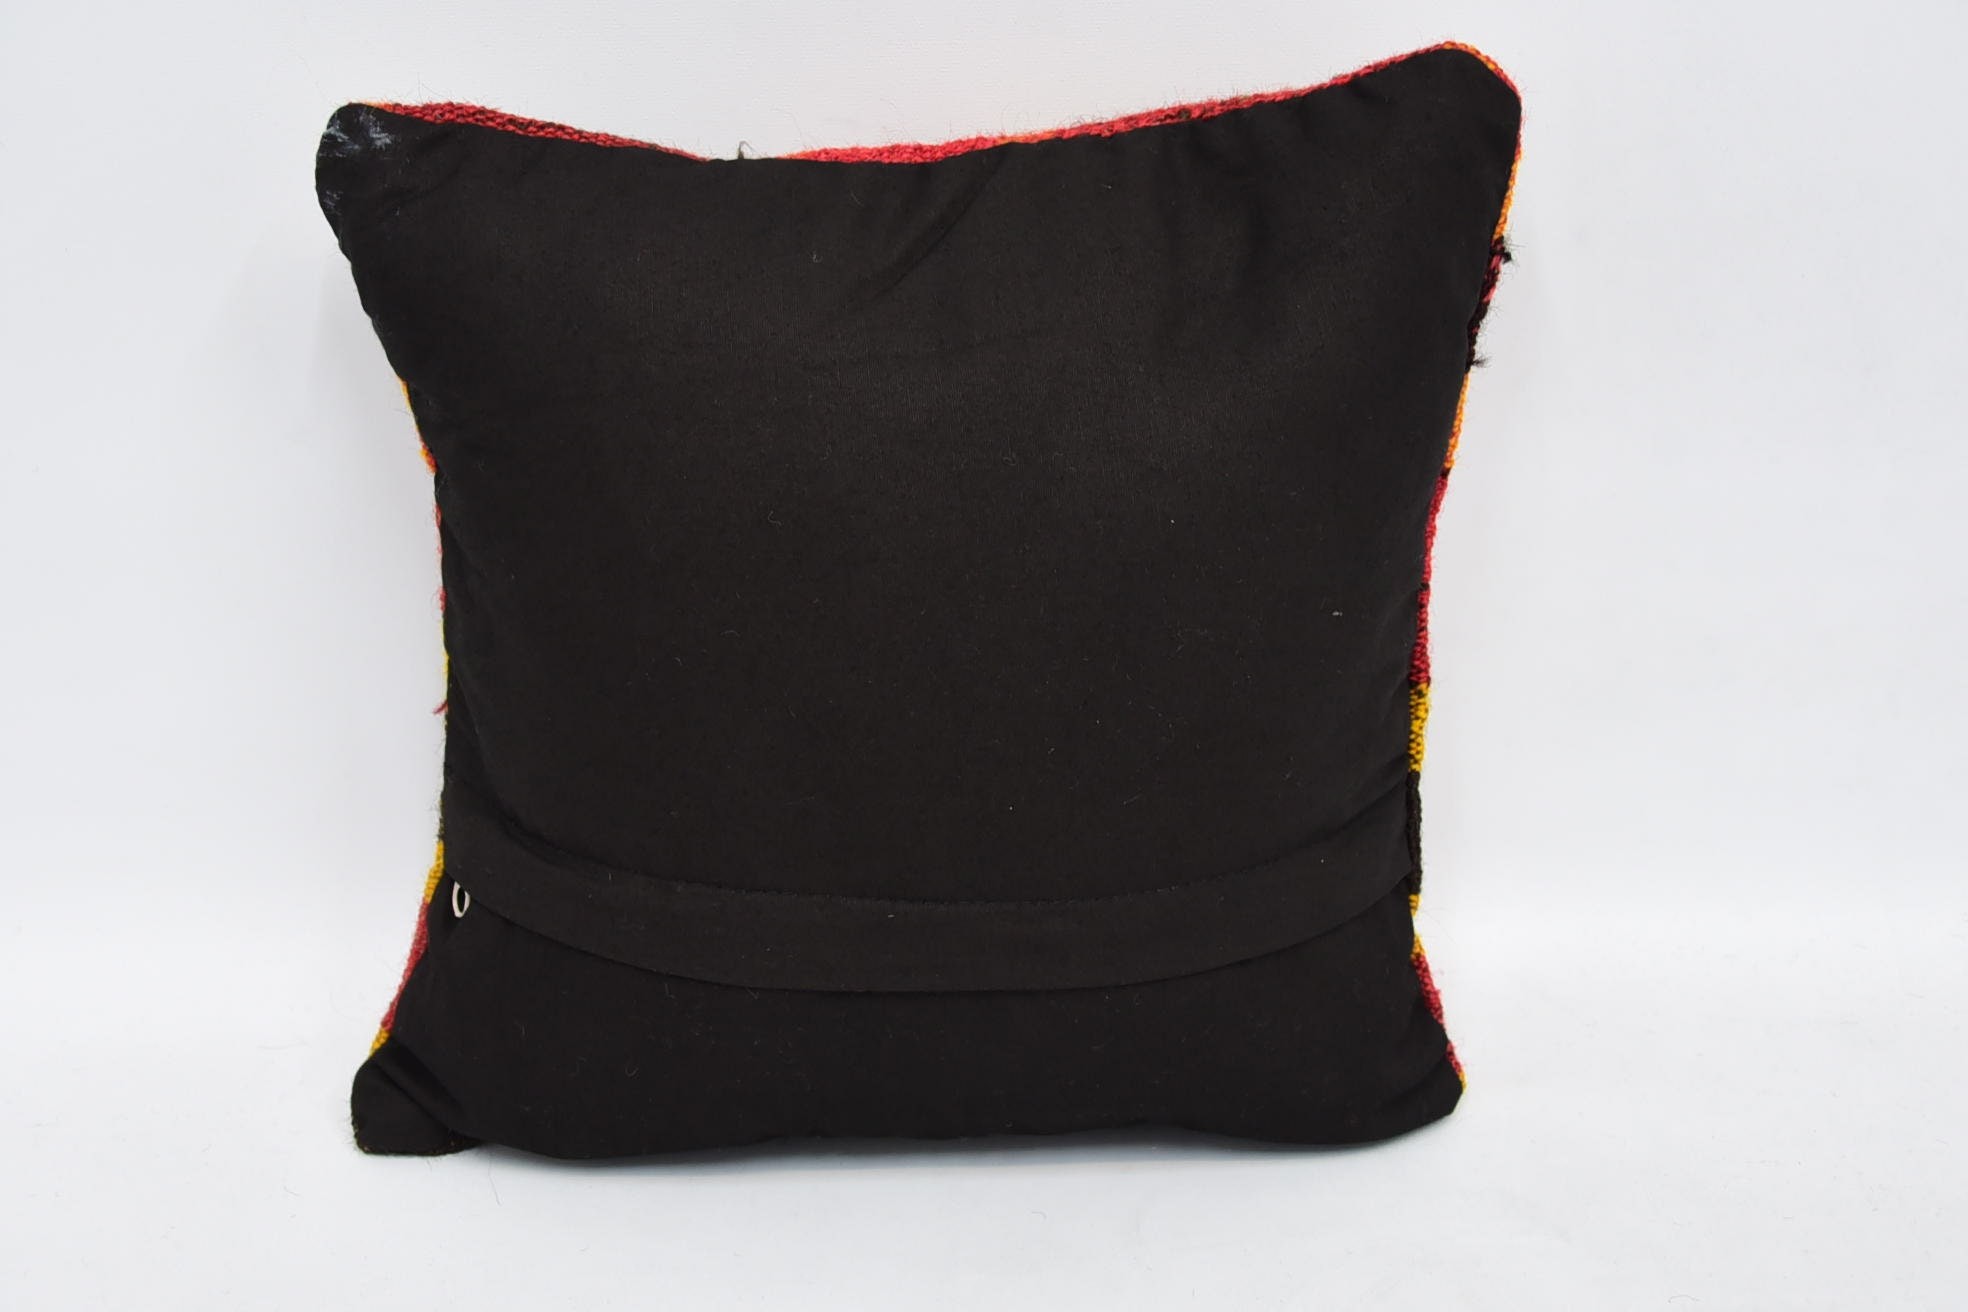 12"x12" Red Cushion Cover, Boho Pillow Sham Cover, Vintage Pillow, Sofa Bolster Pillow Sham, Vintage Kilim Throw Pillow